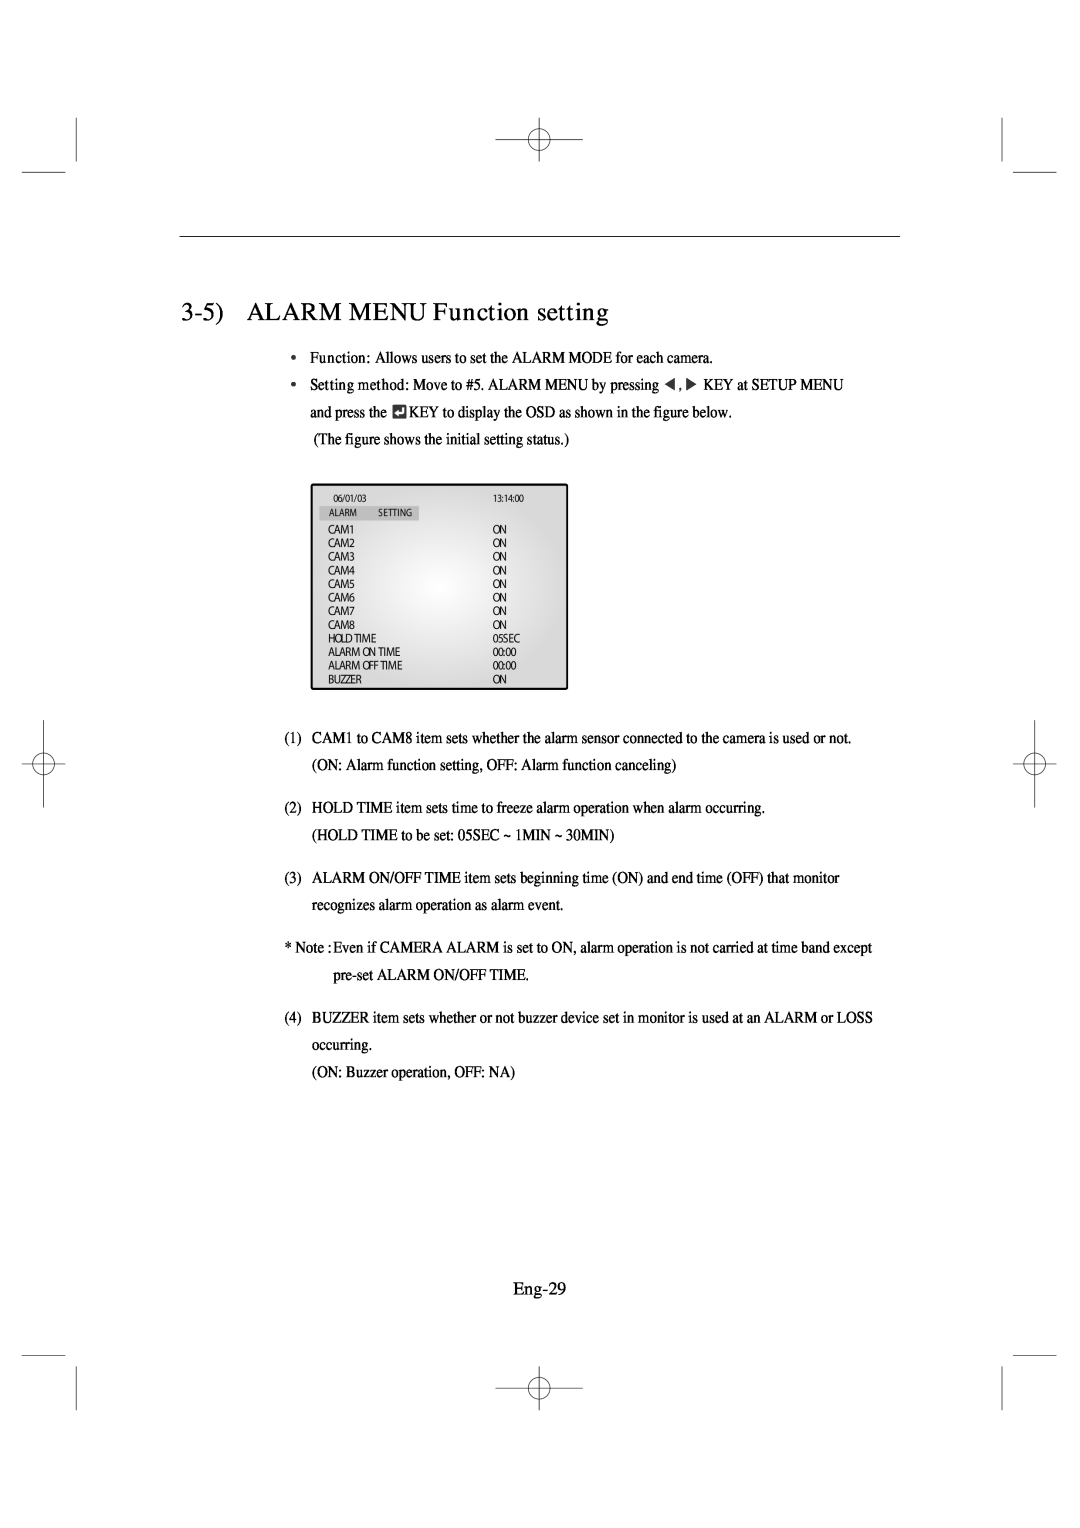 Samsung SSC17WEB manual 3-5ALARM MENU Function setting, Eng-29 